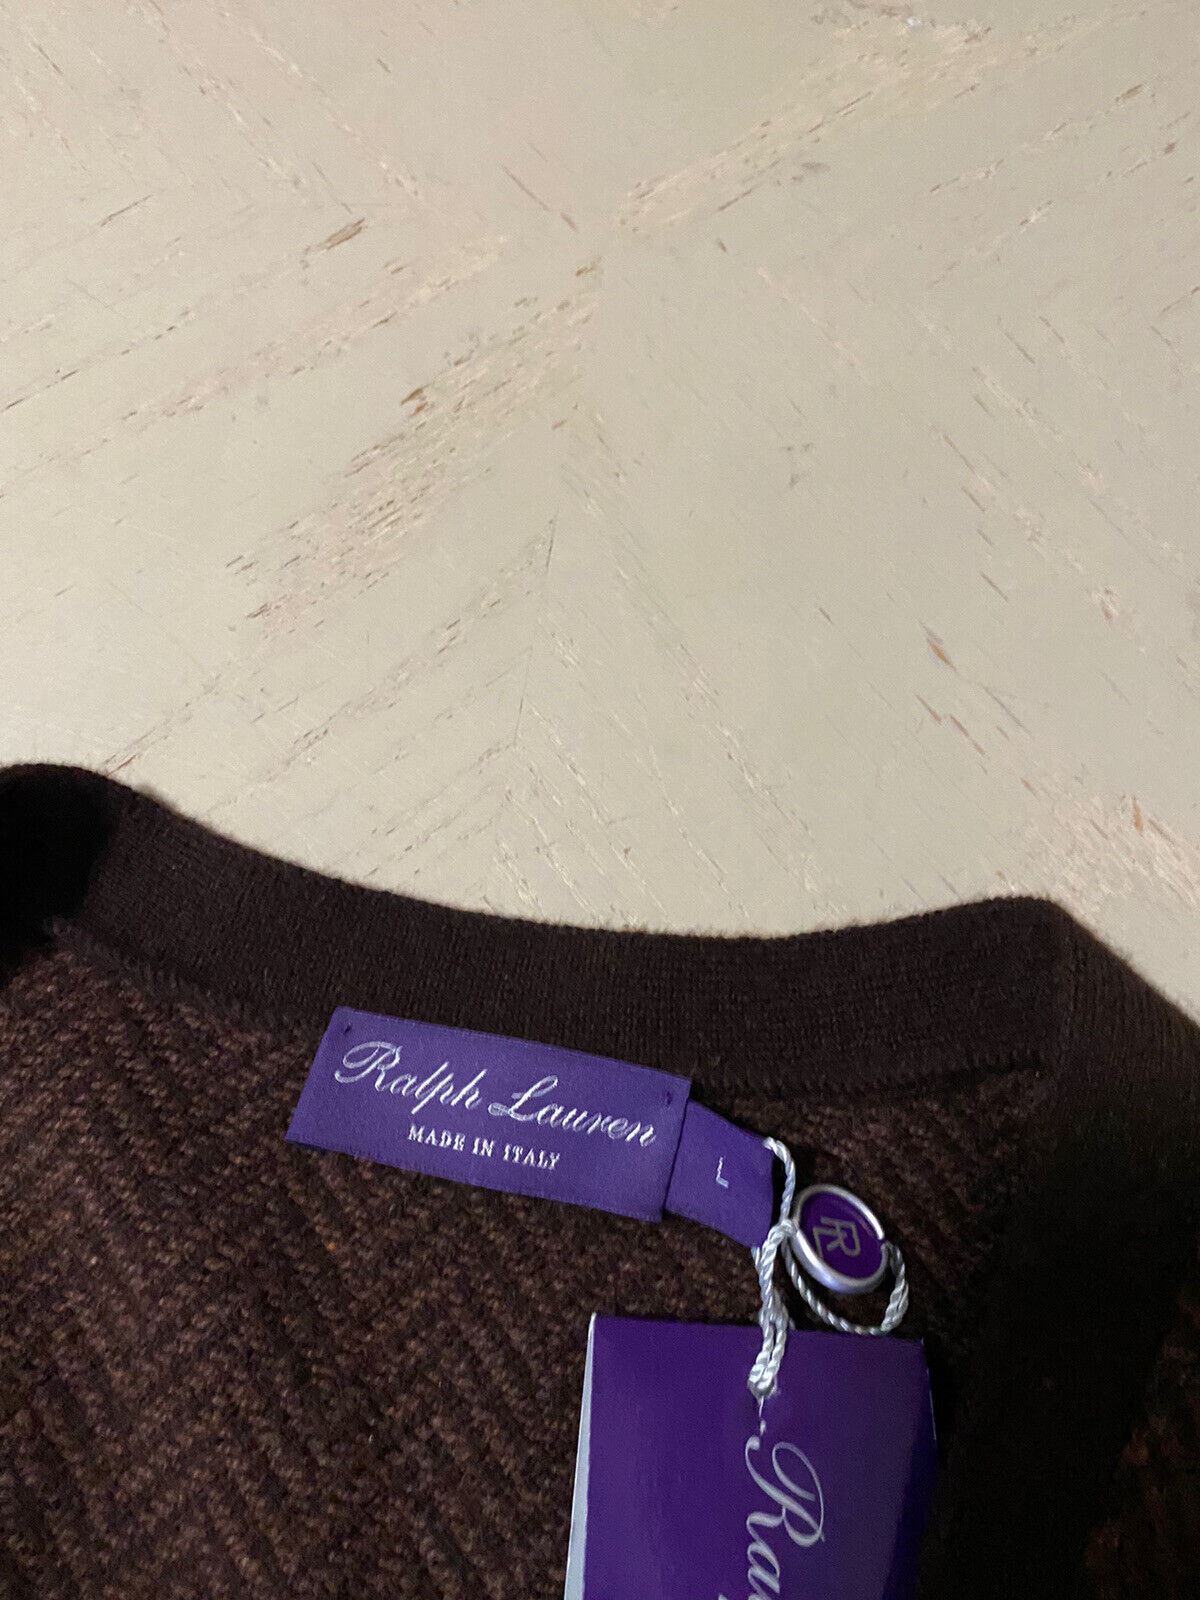 NWT $1695 Ralph Lauren Purple Label Men Cardigan  Cashmere Sweater Brown L Italy